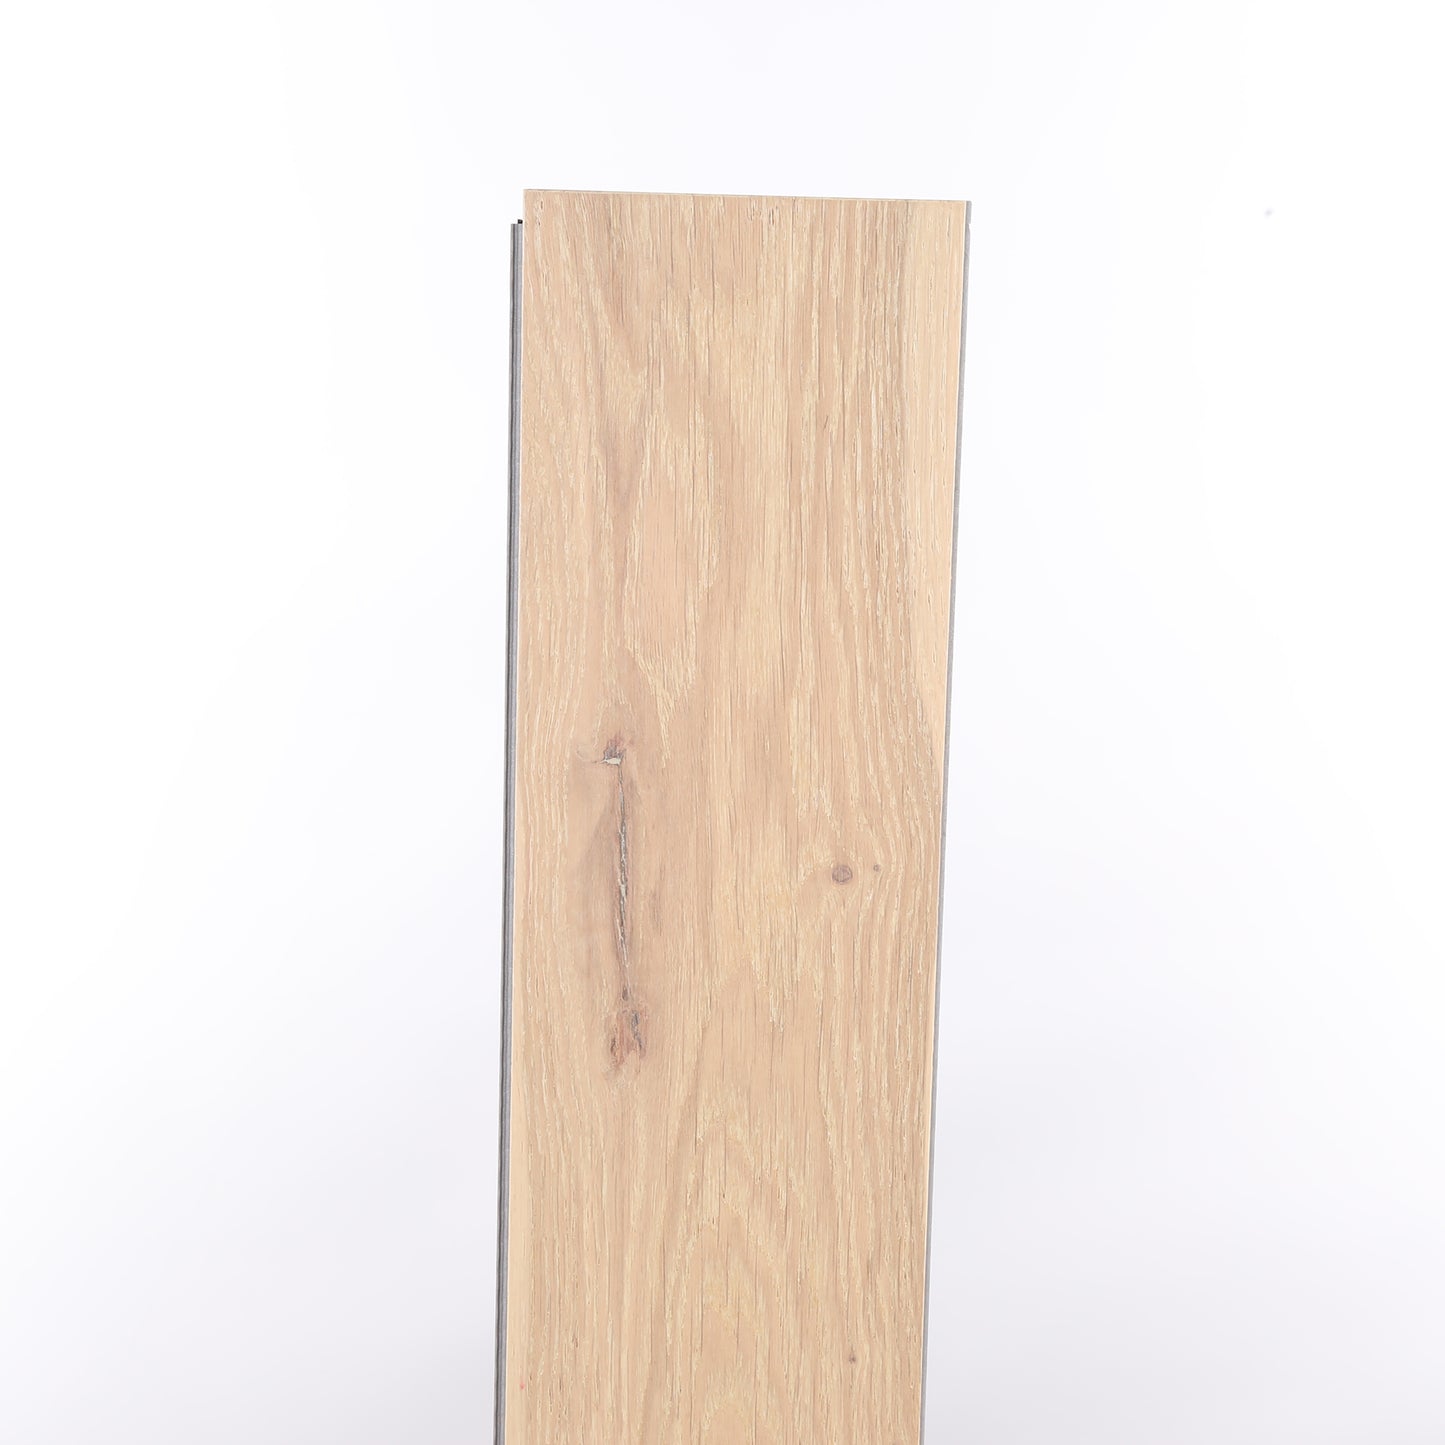 7mm Butterscotch White Oak Waterproof Engineered Hardwood Flooring 5 in. Wide x Varying Length Long